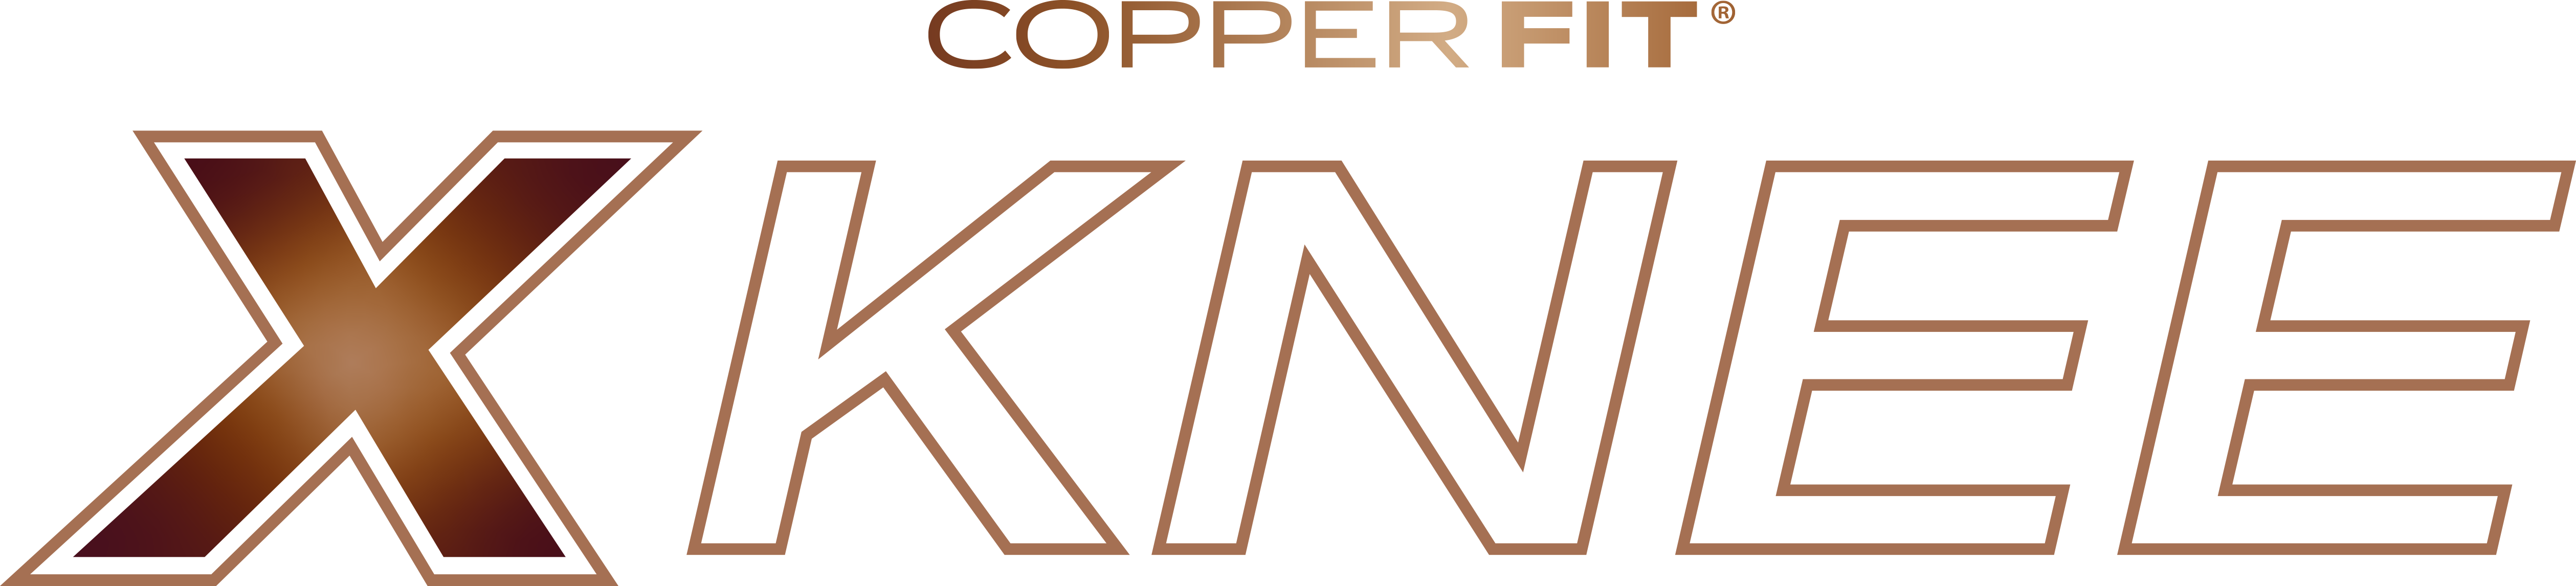 Copper Fit X Knee